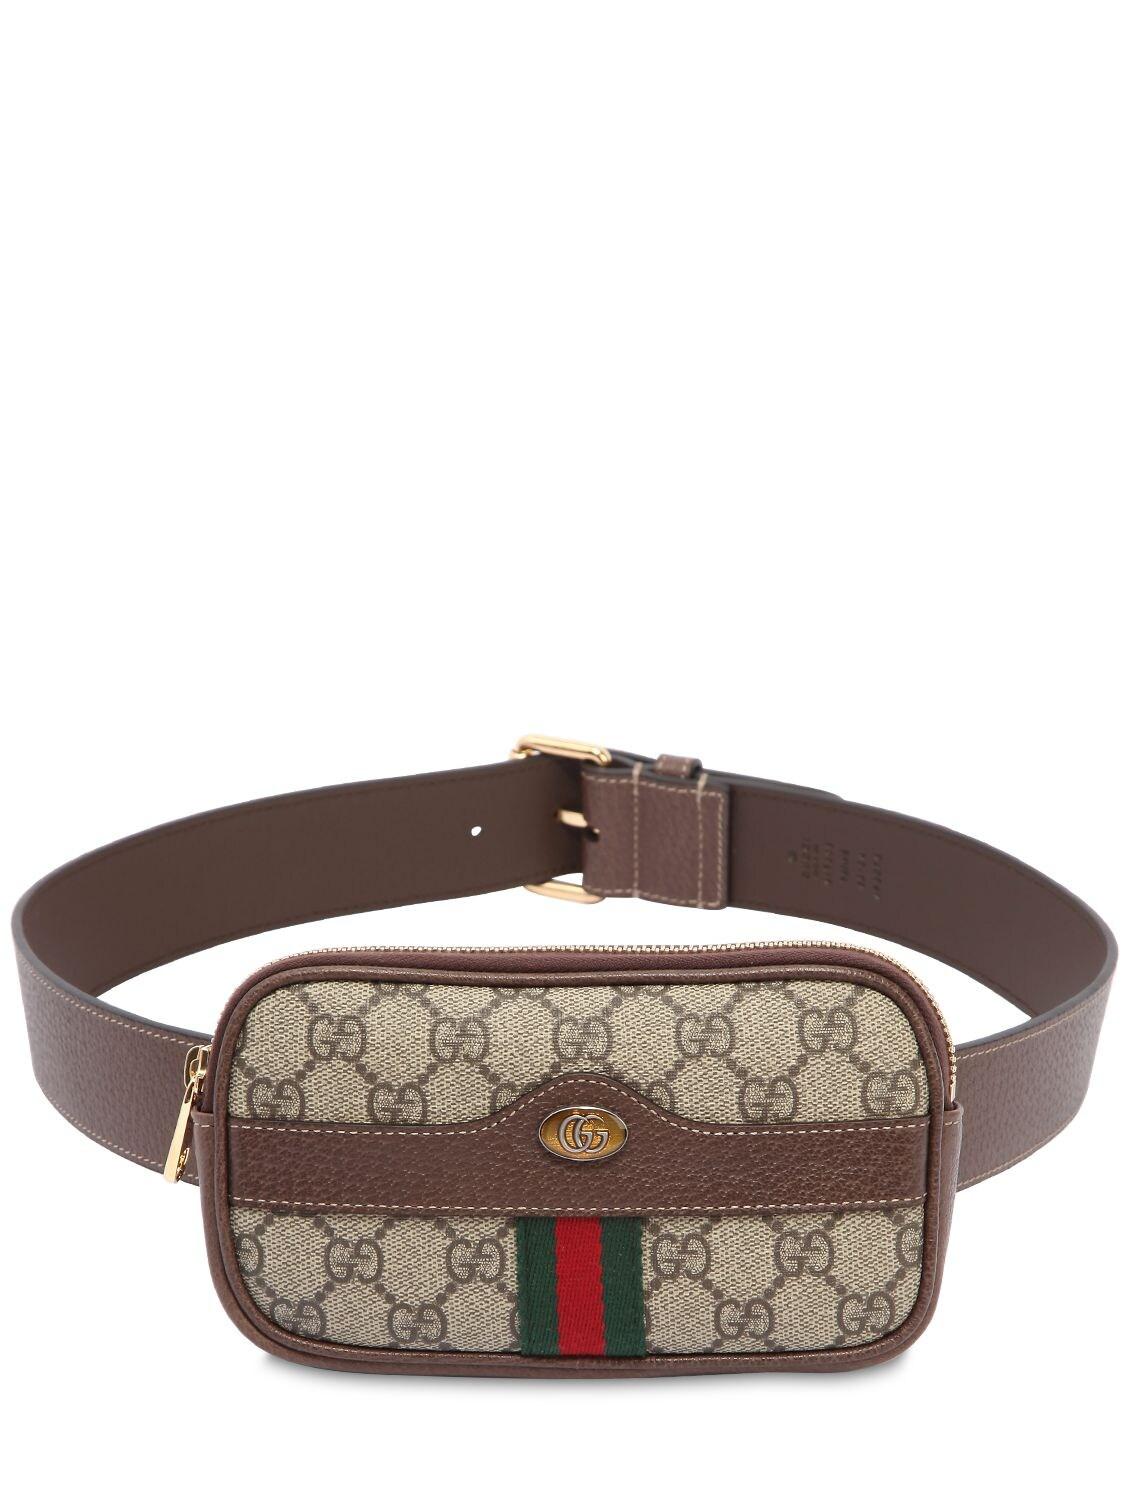 Gucci Leather Mini Ophidia Gg Supreme Belt Bag in Beige (Natural) - Lyst